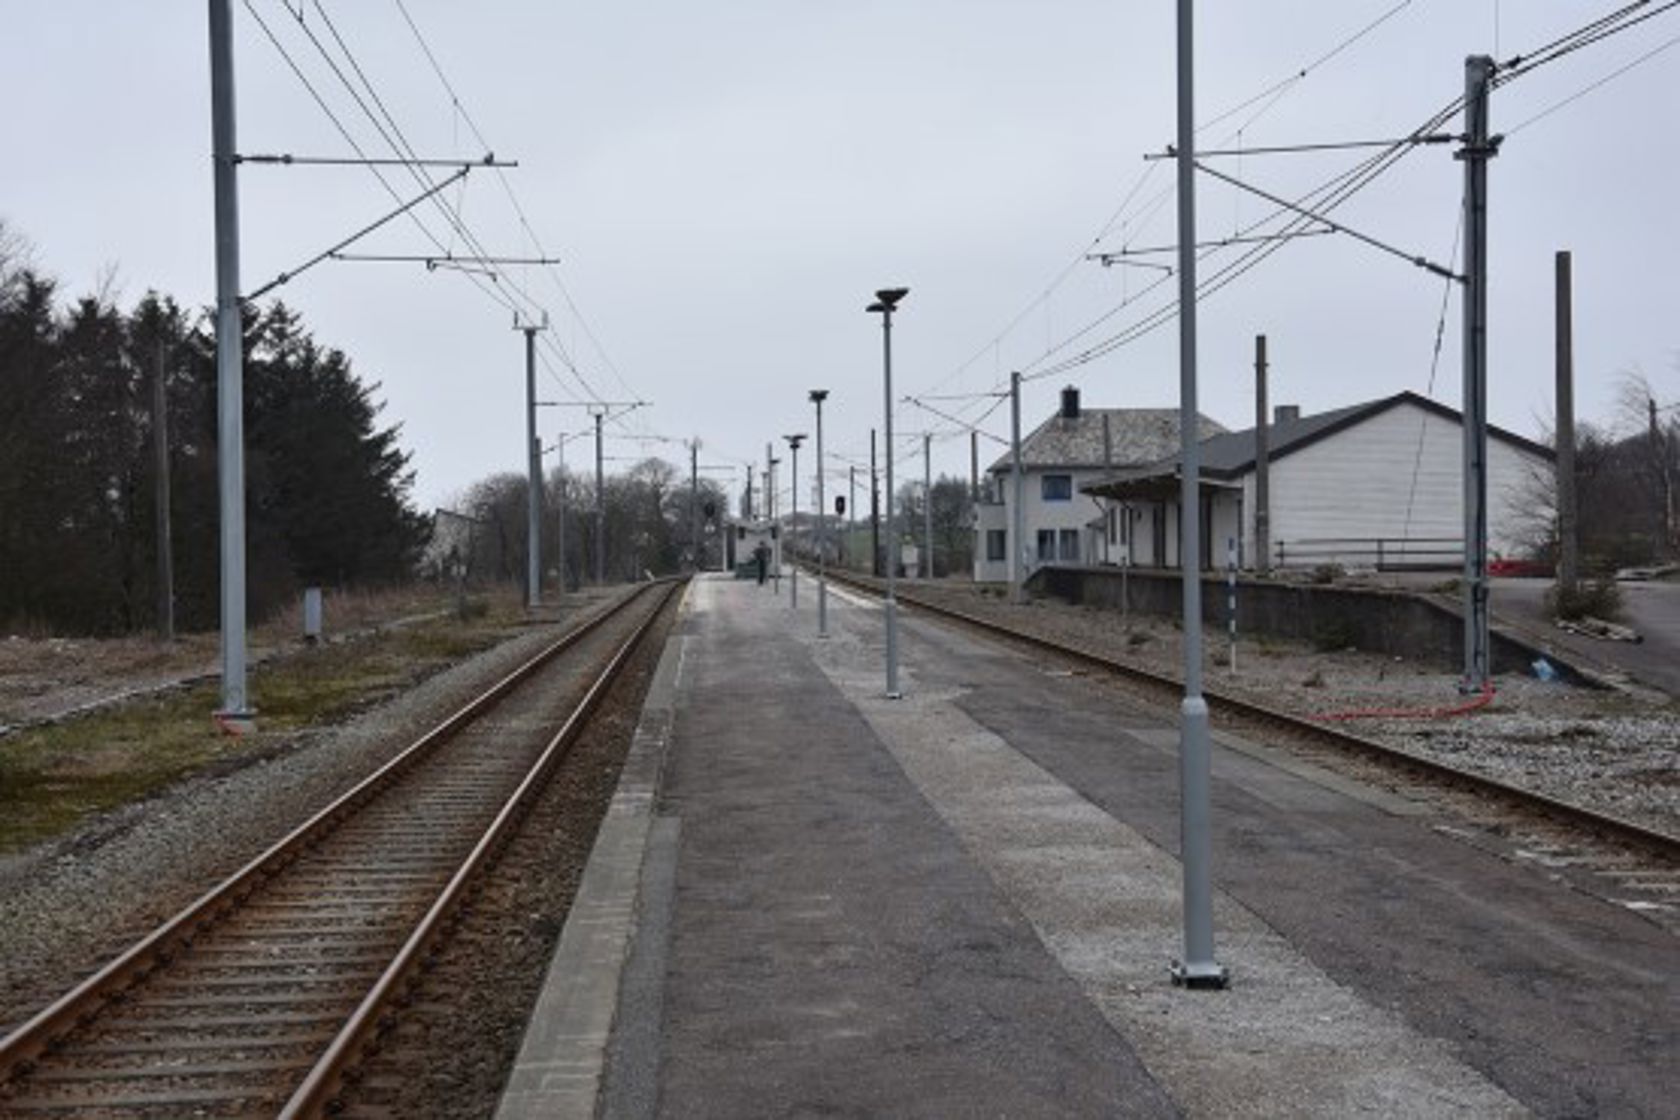 Exterior view of Vigrestad station